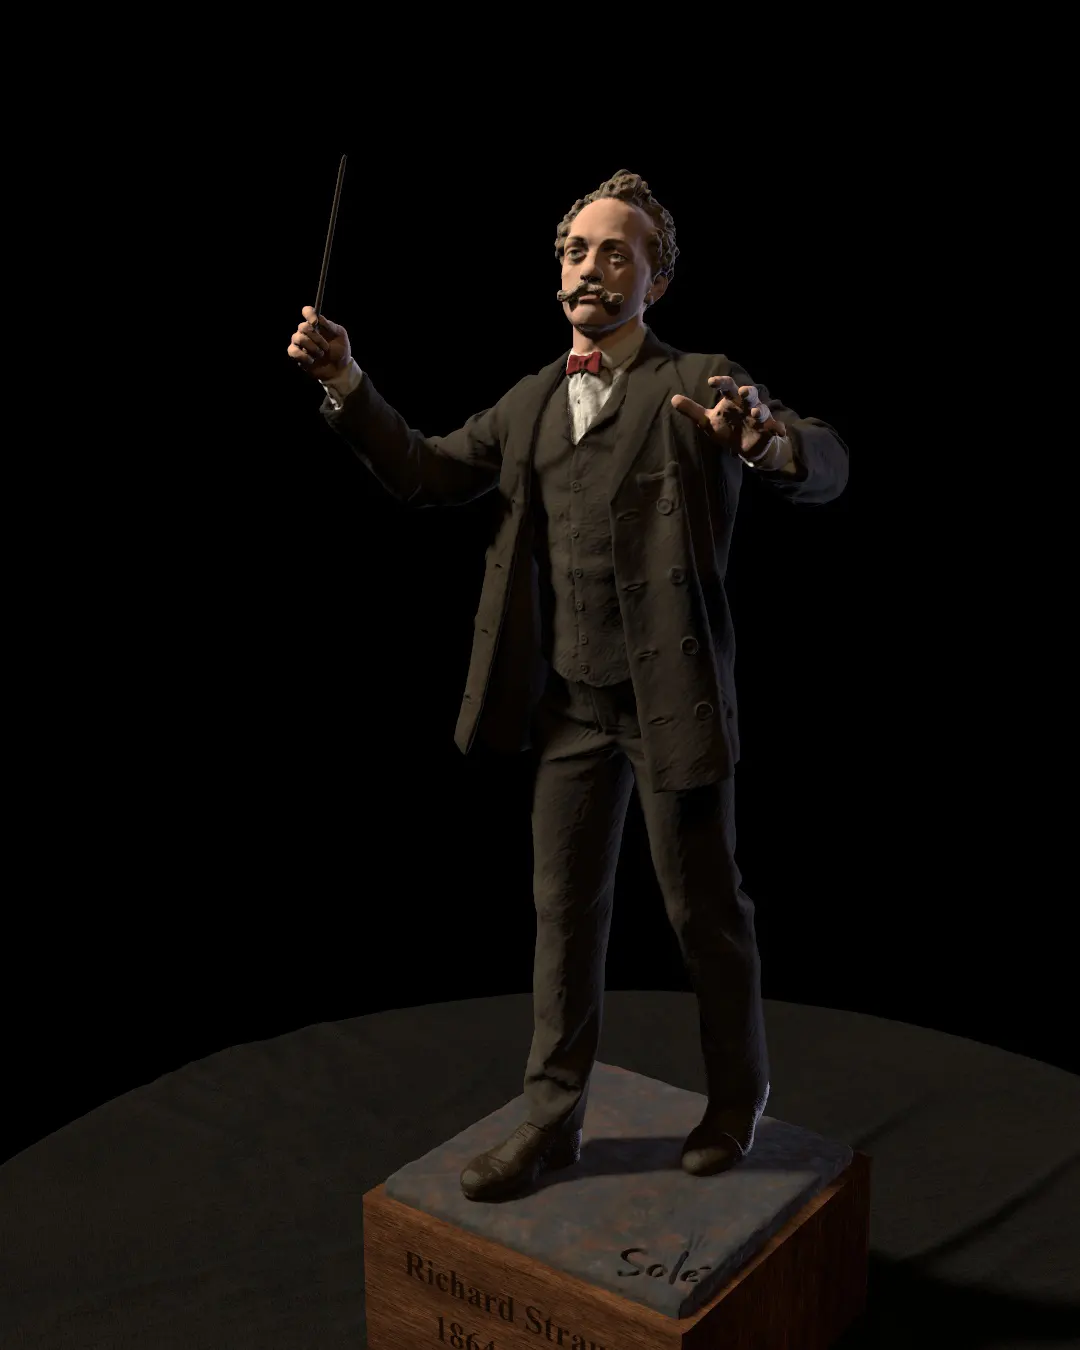 Richard-Strauss-statue/Rendering-of-Richard-Strauss-statue-modeled-by-Emil-Sole-5.webp